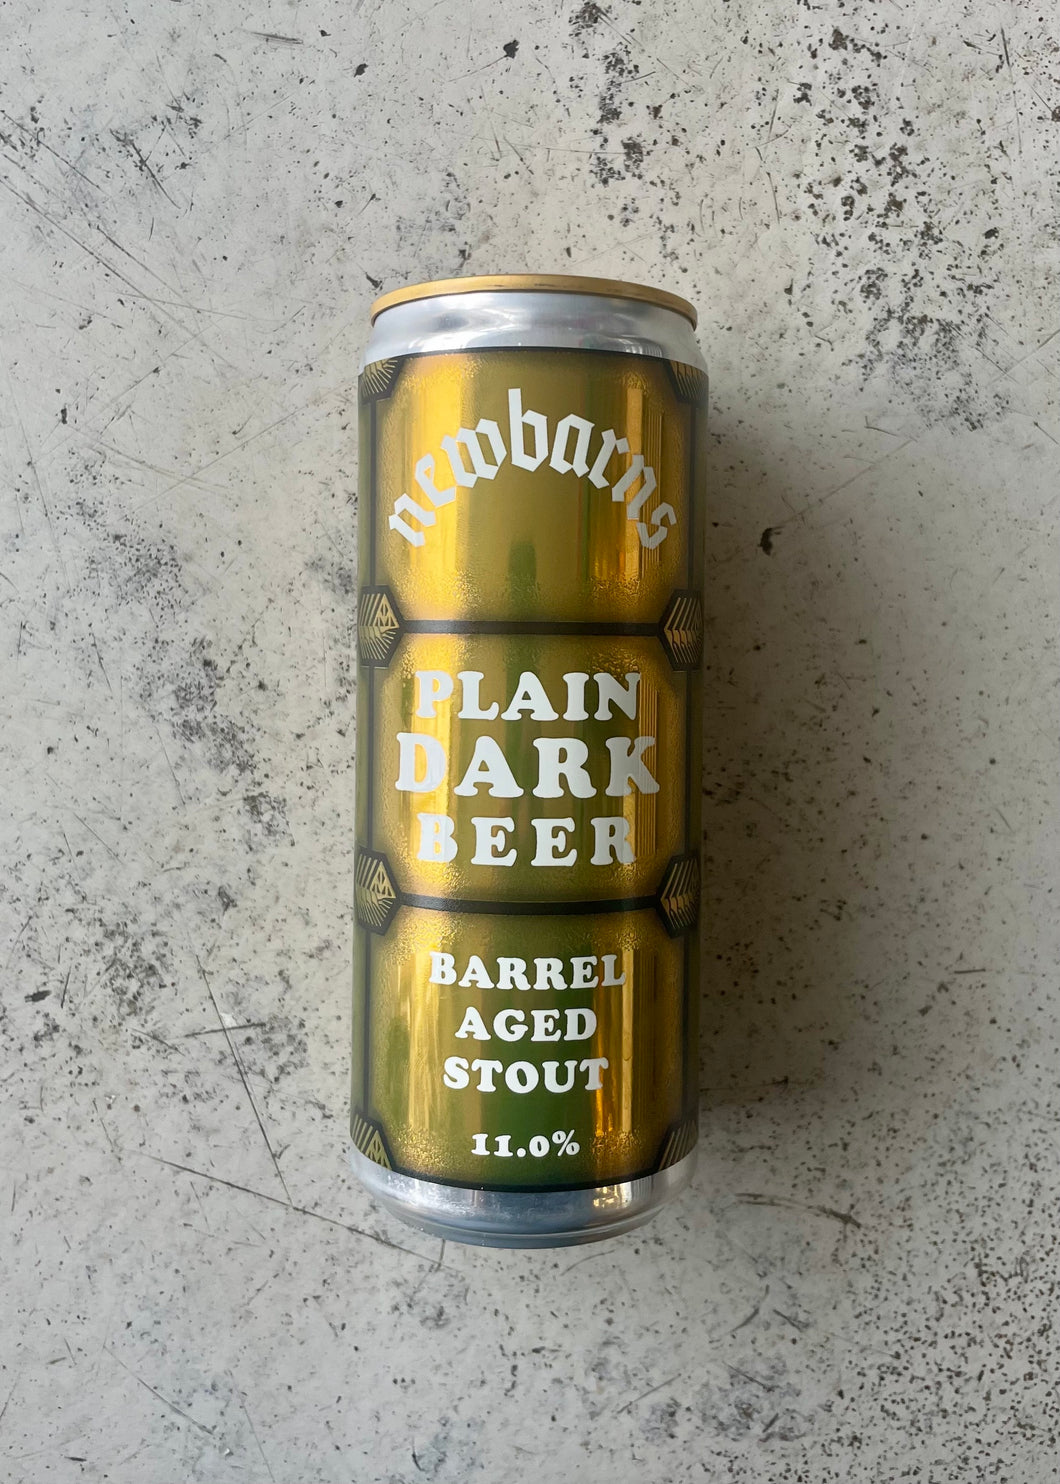 Newbarns Barrel-Aged Plain Dark Beer 11% (330ml)